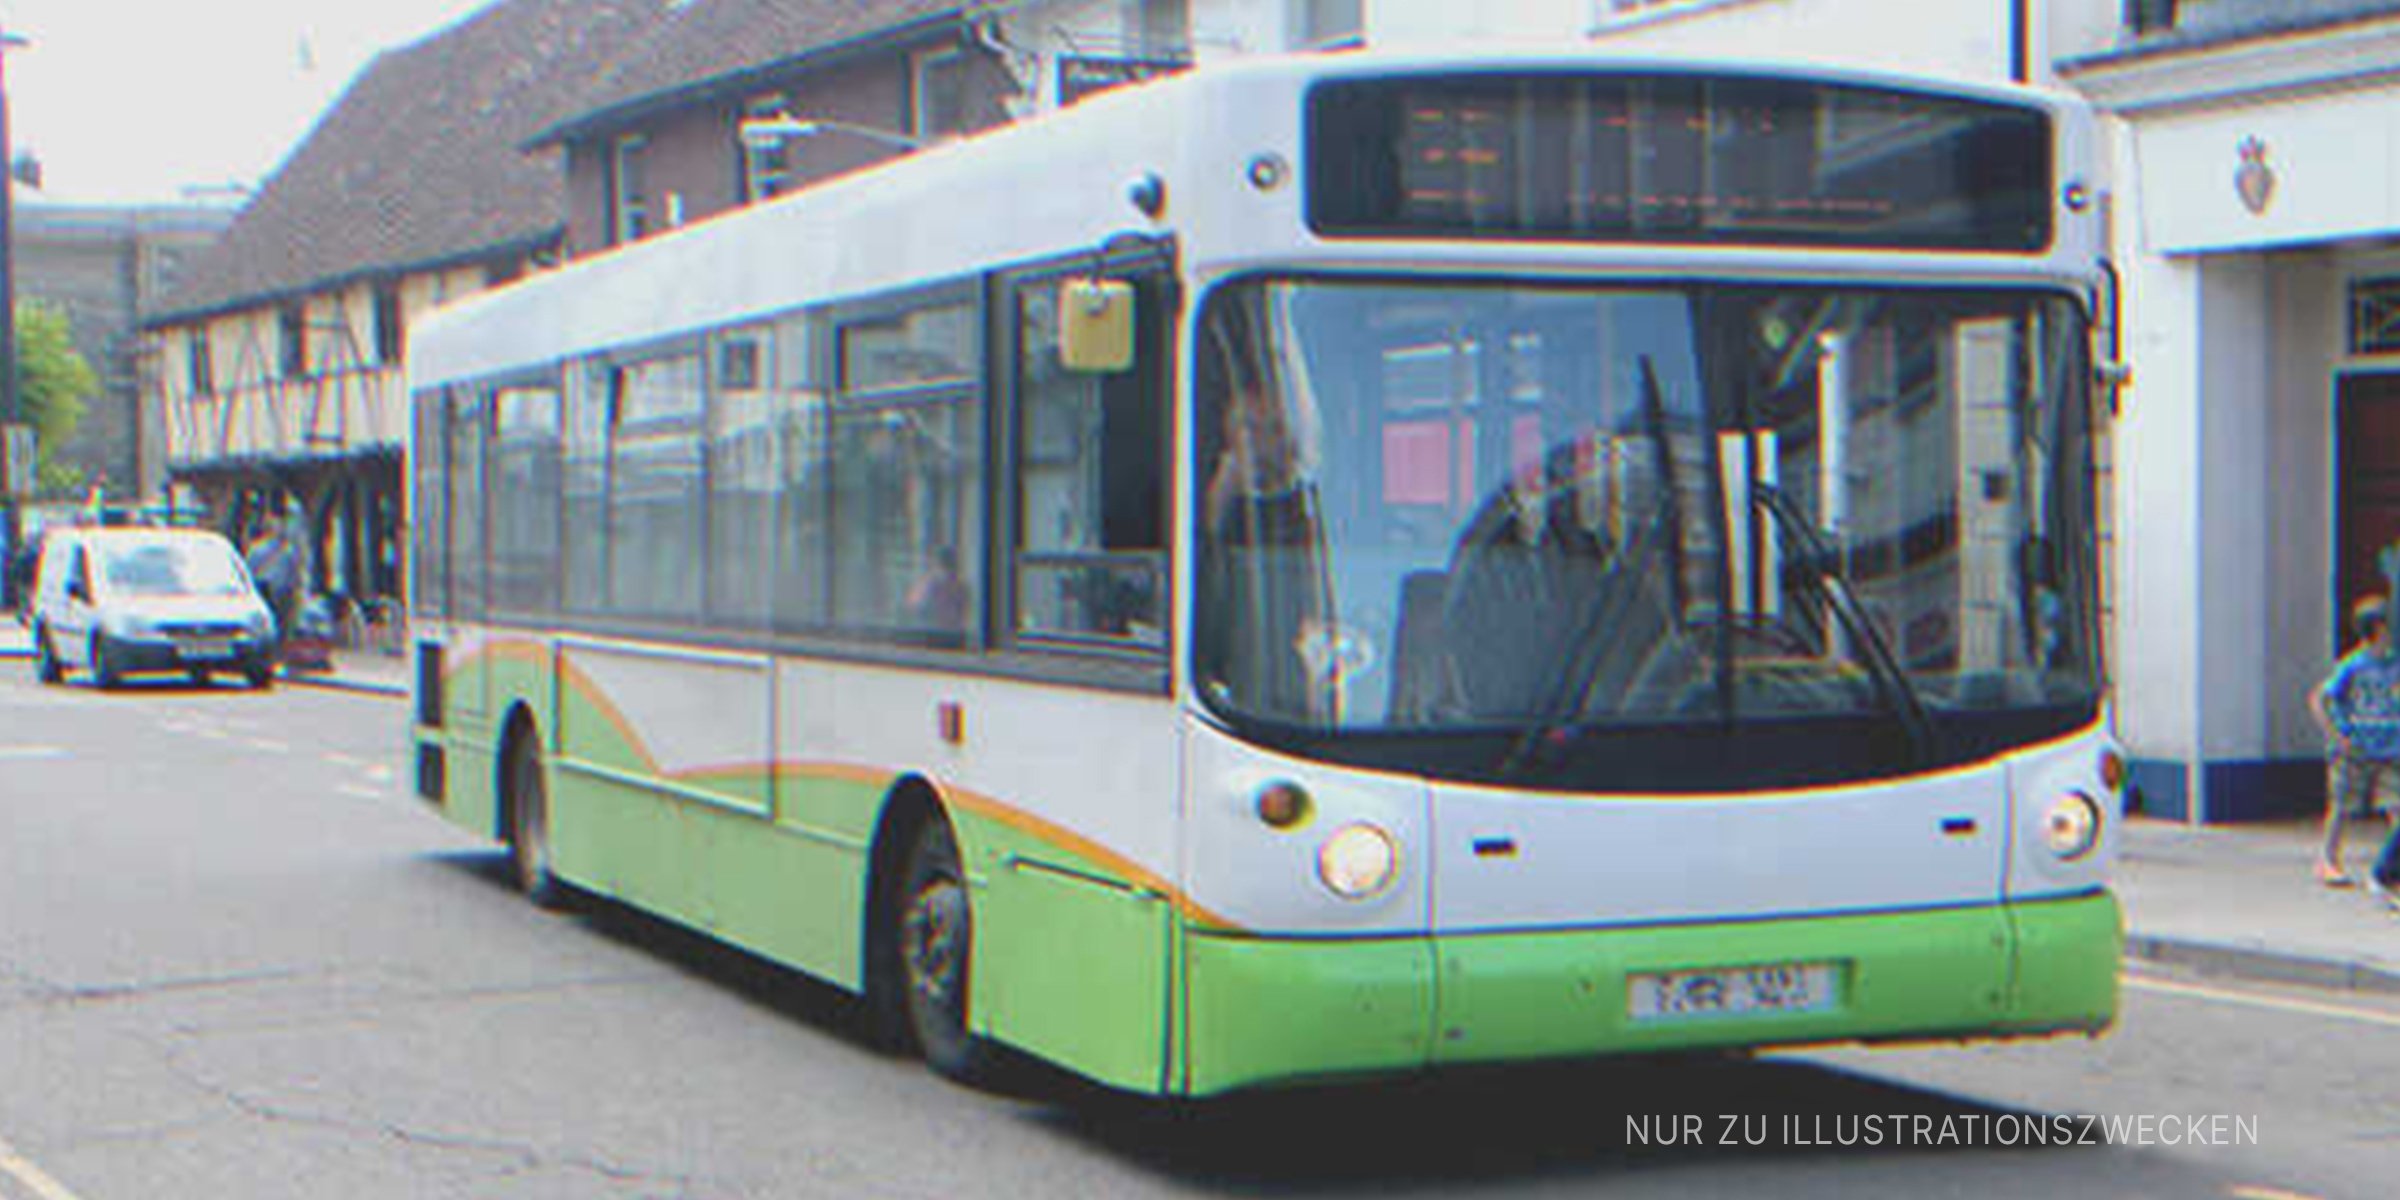 Bus unterwegs | Quelle: Flickr / charles cars (CC BY 2.0)